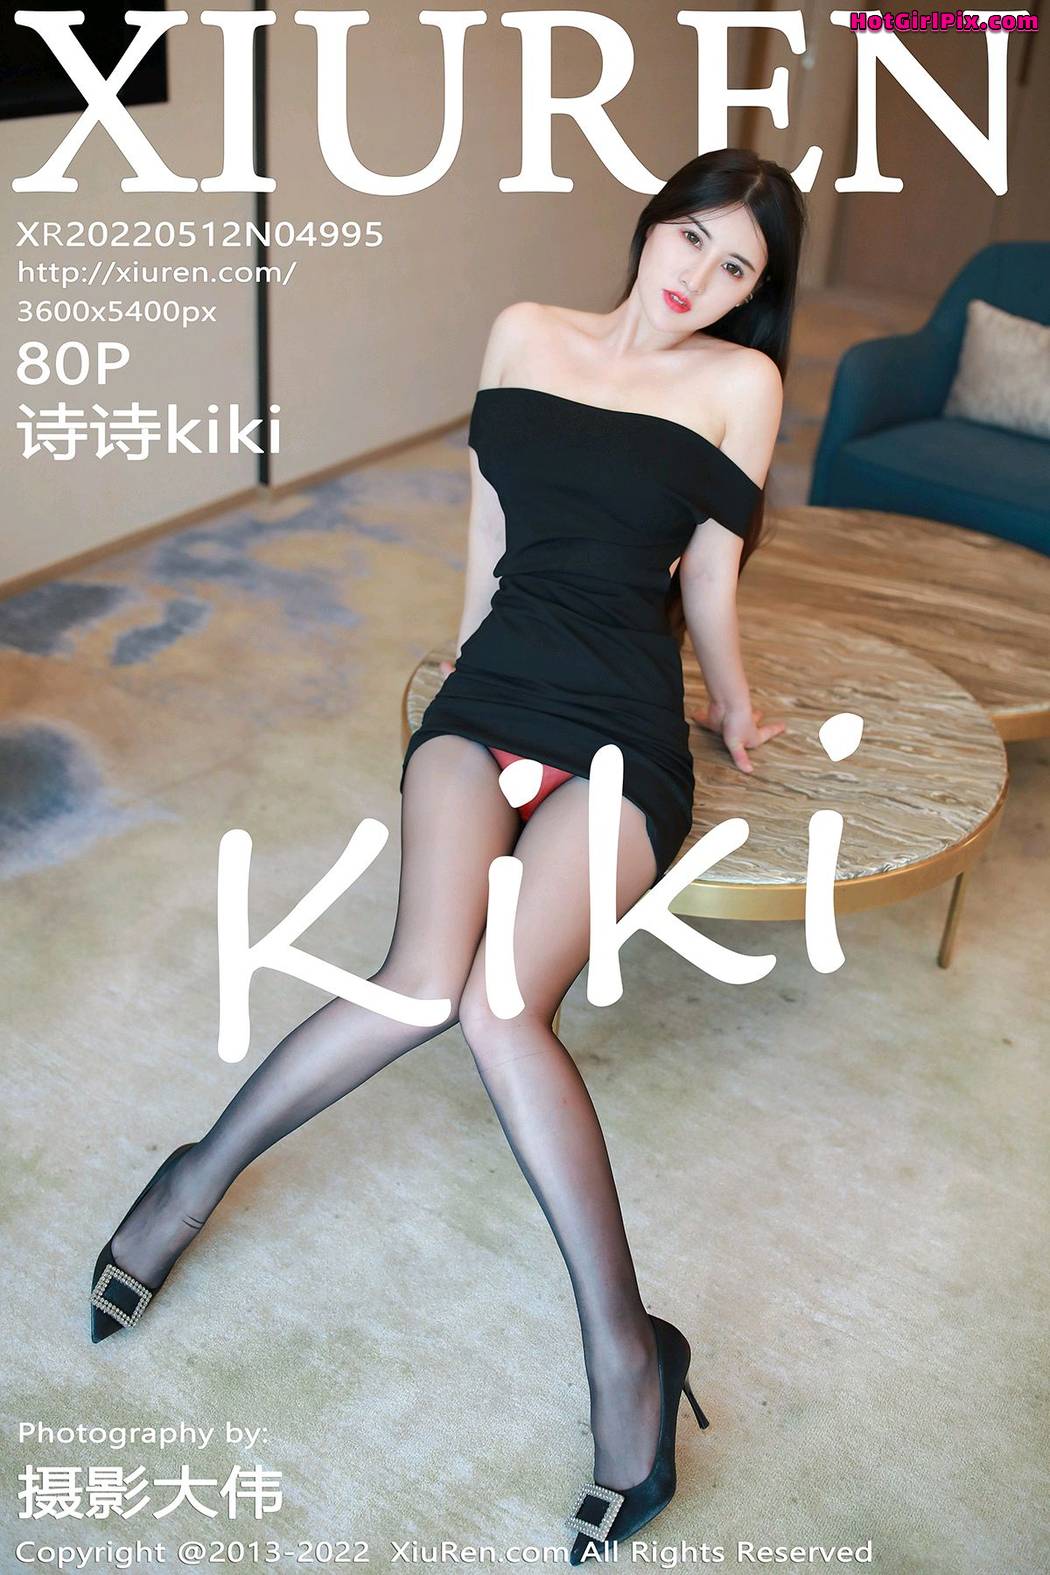 [XIUREN] No.4995 诗诗kiki Cover Photo